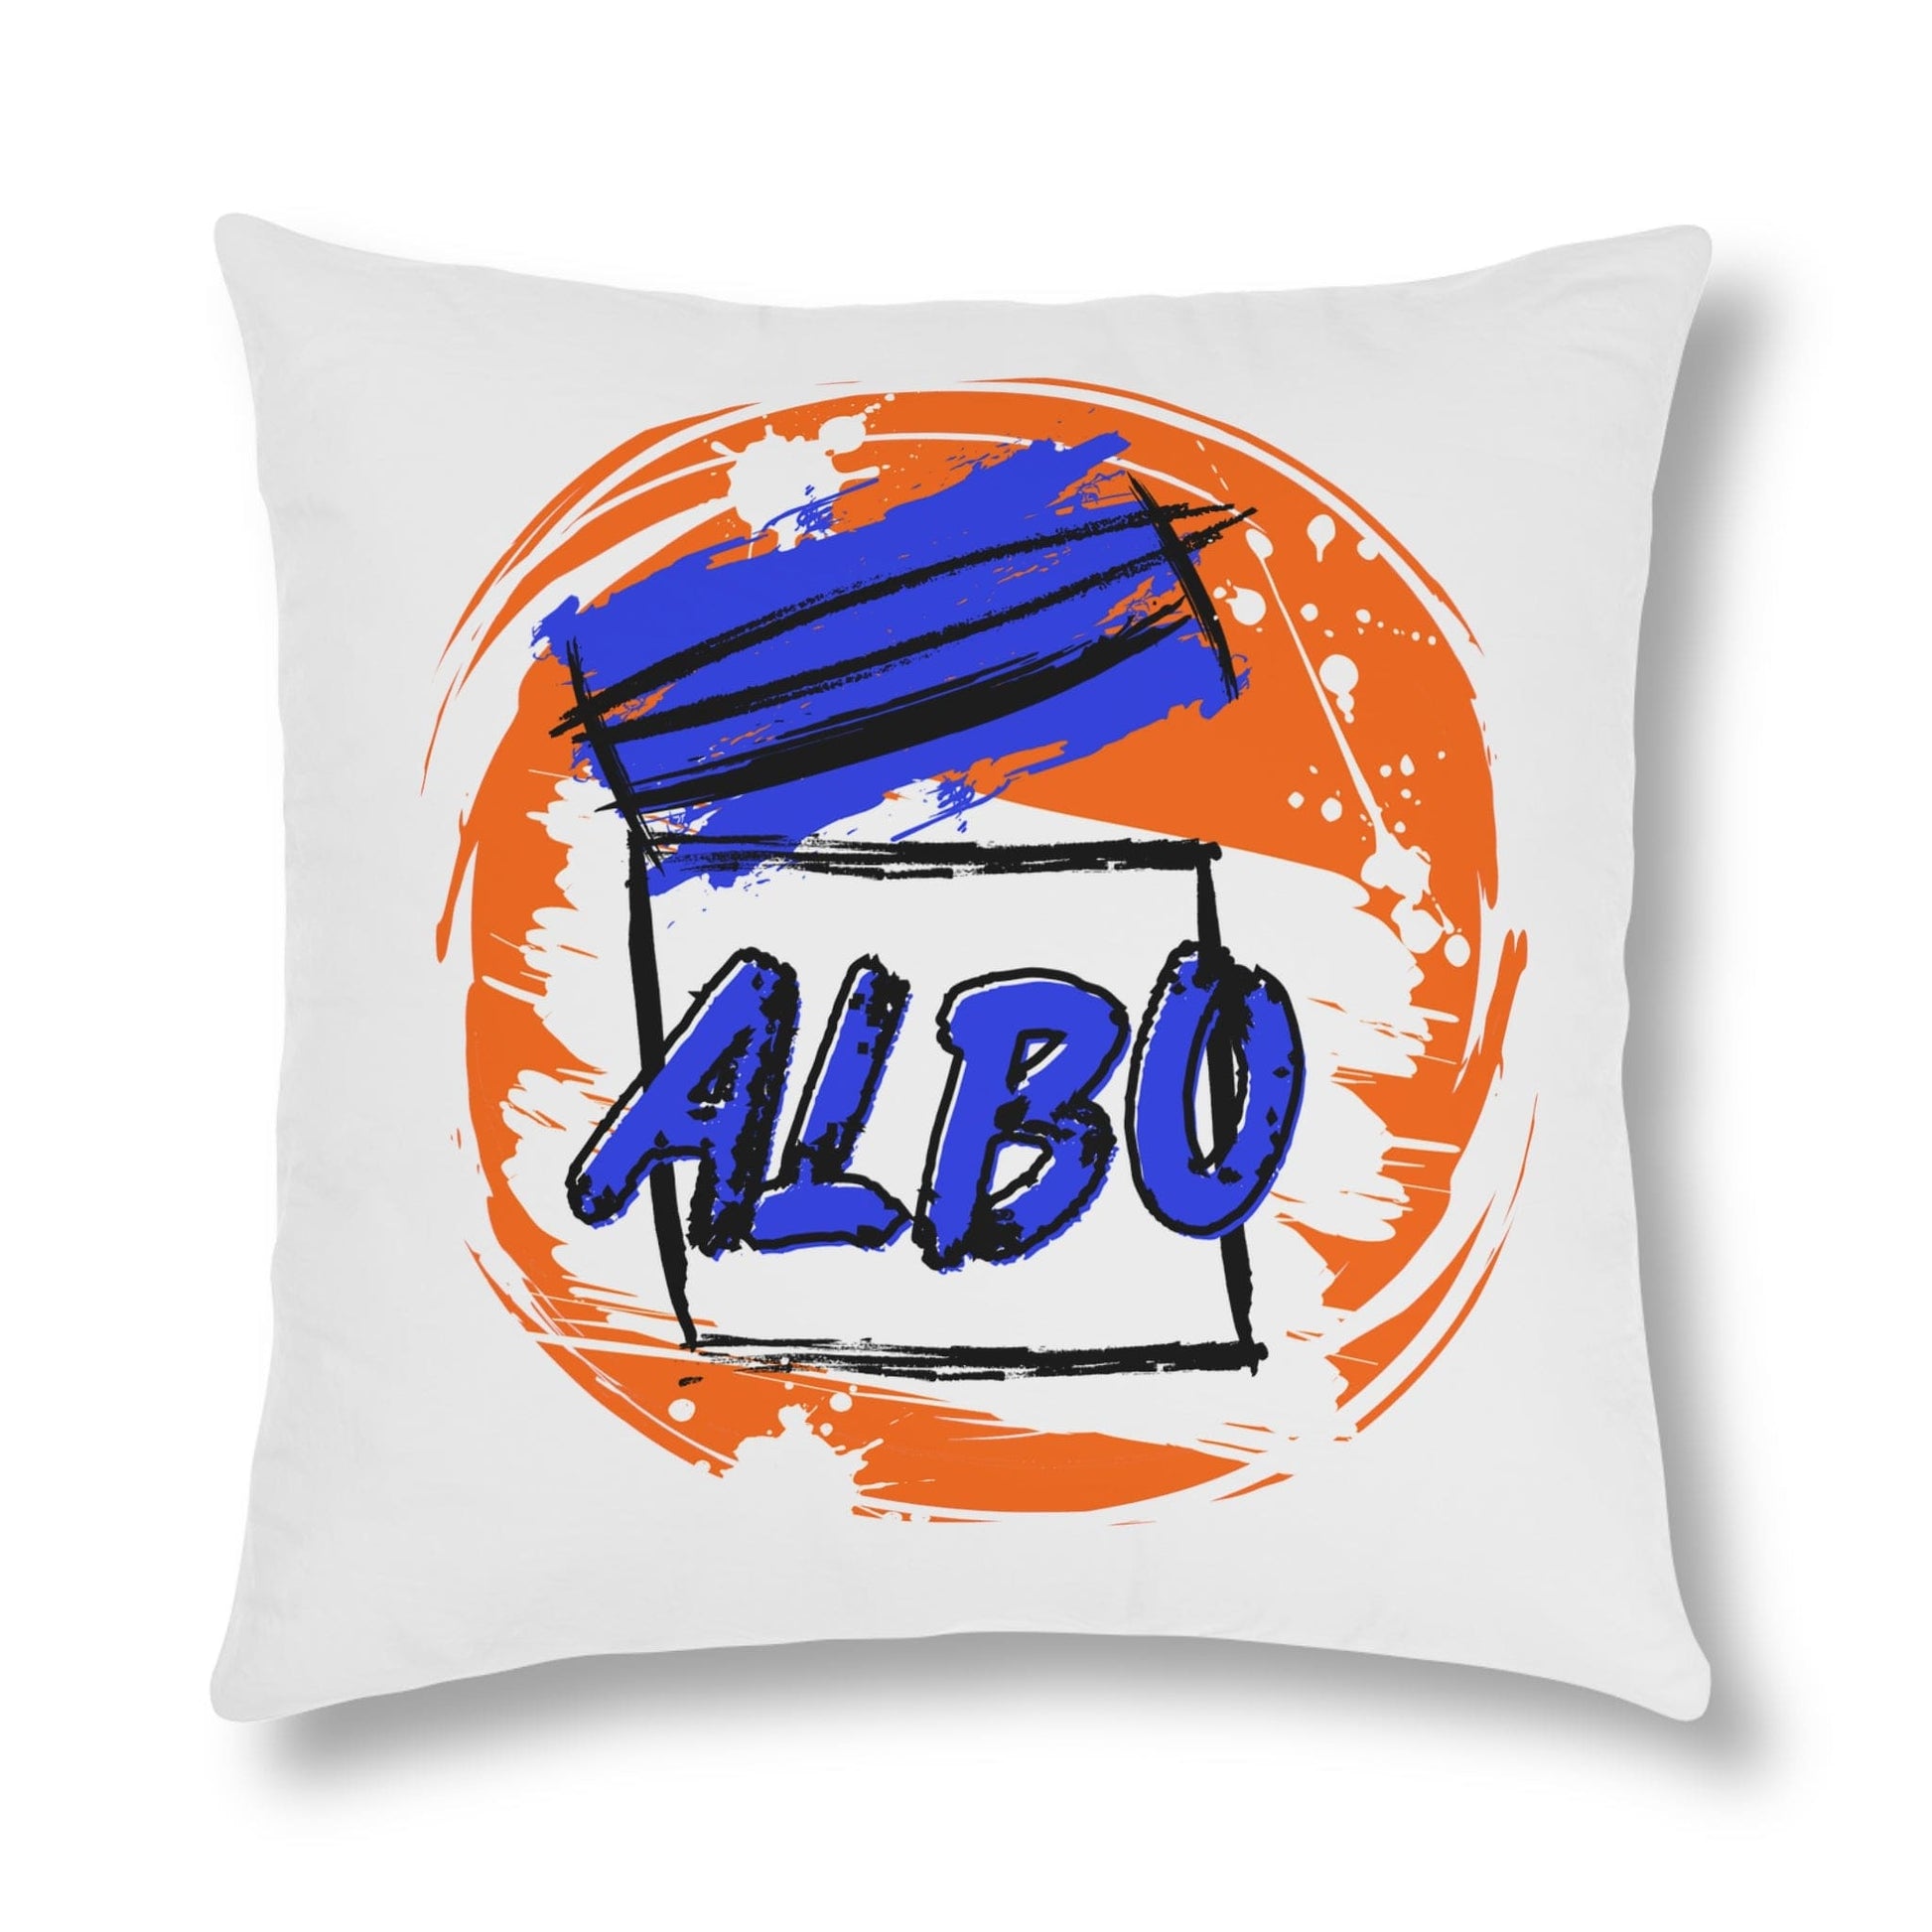 Home Decor Artsy Albo Waterproof Pillows LEATHERDADDY BATOR